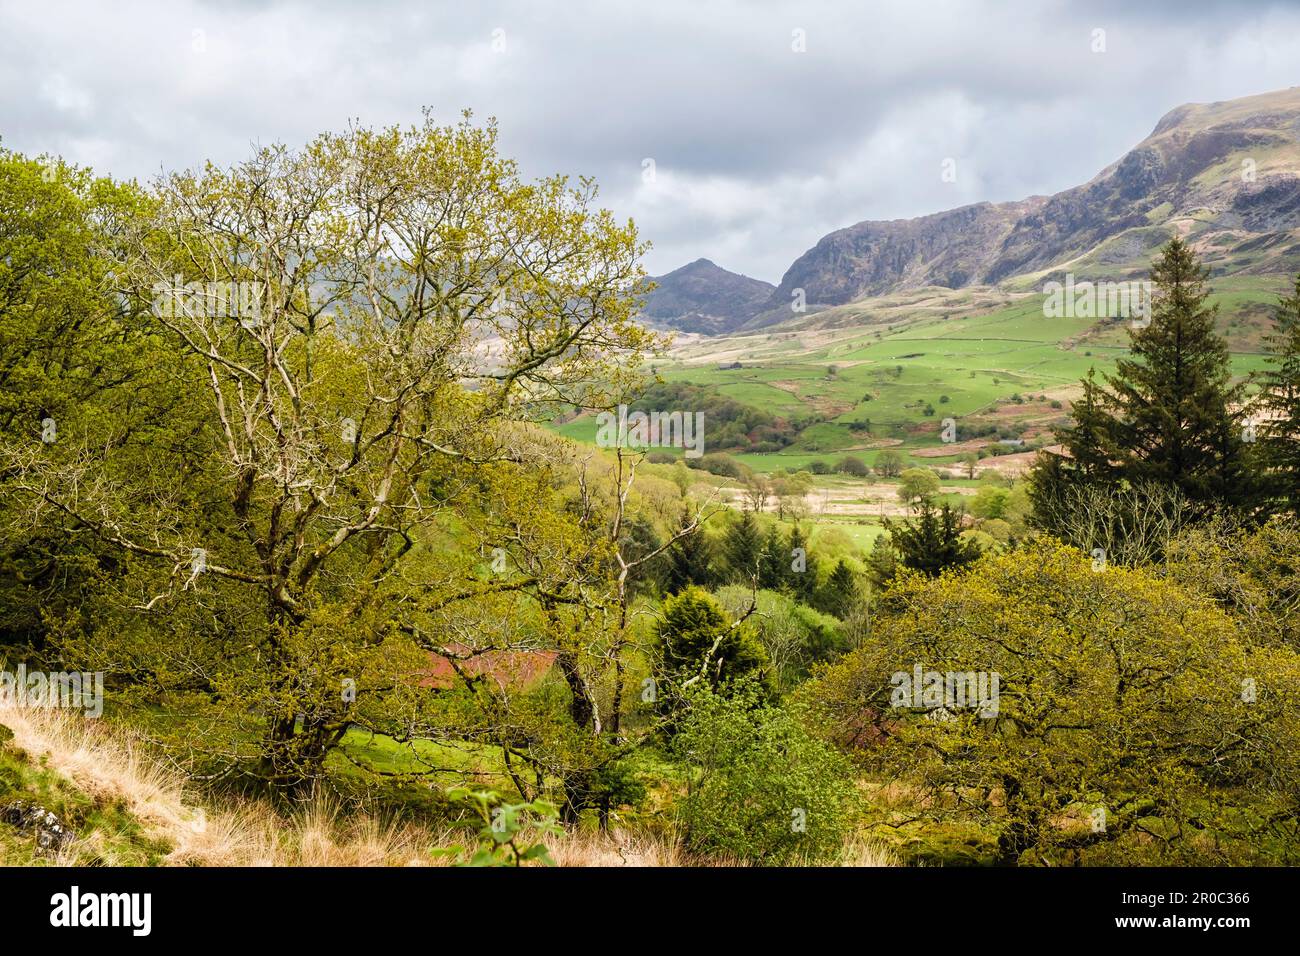 View up Cwm Pennant valley from wooded hillside in Snowdonia National Park. Llanfihangel-y-pennant, Porthmadog, Gwynedd, North Wales, UK, Britain Stock Photo